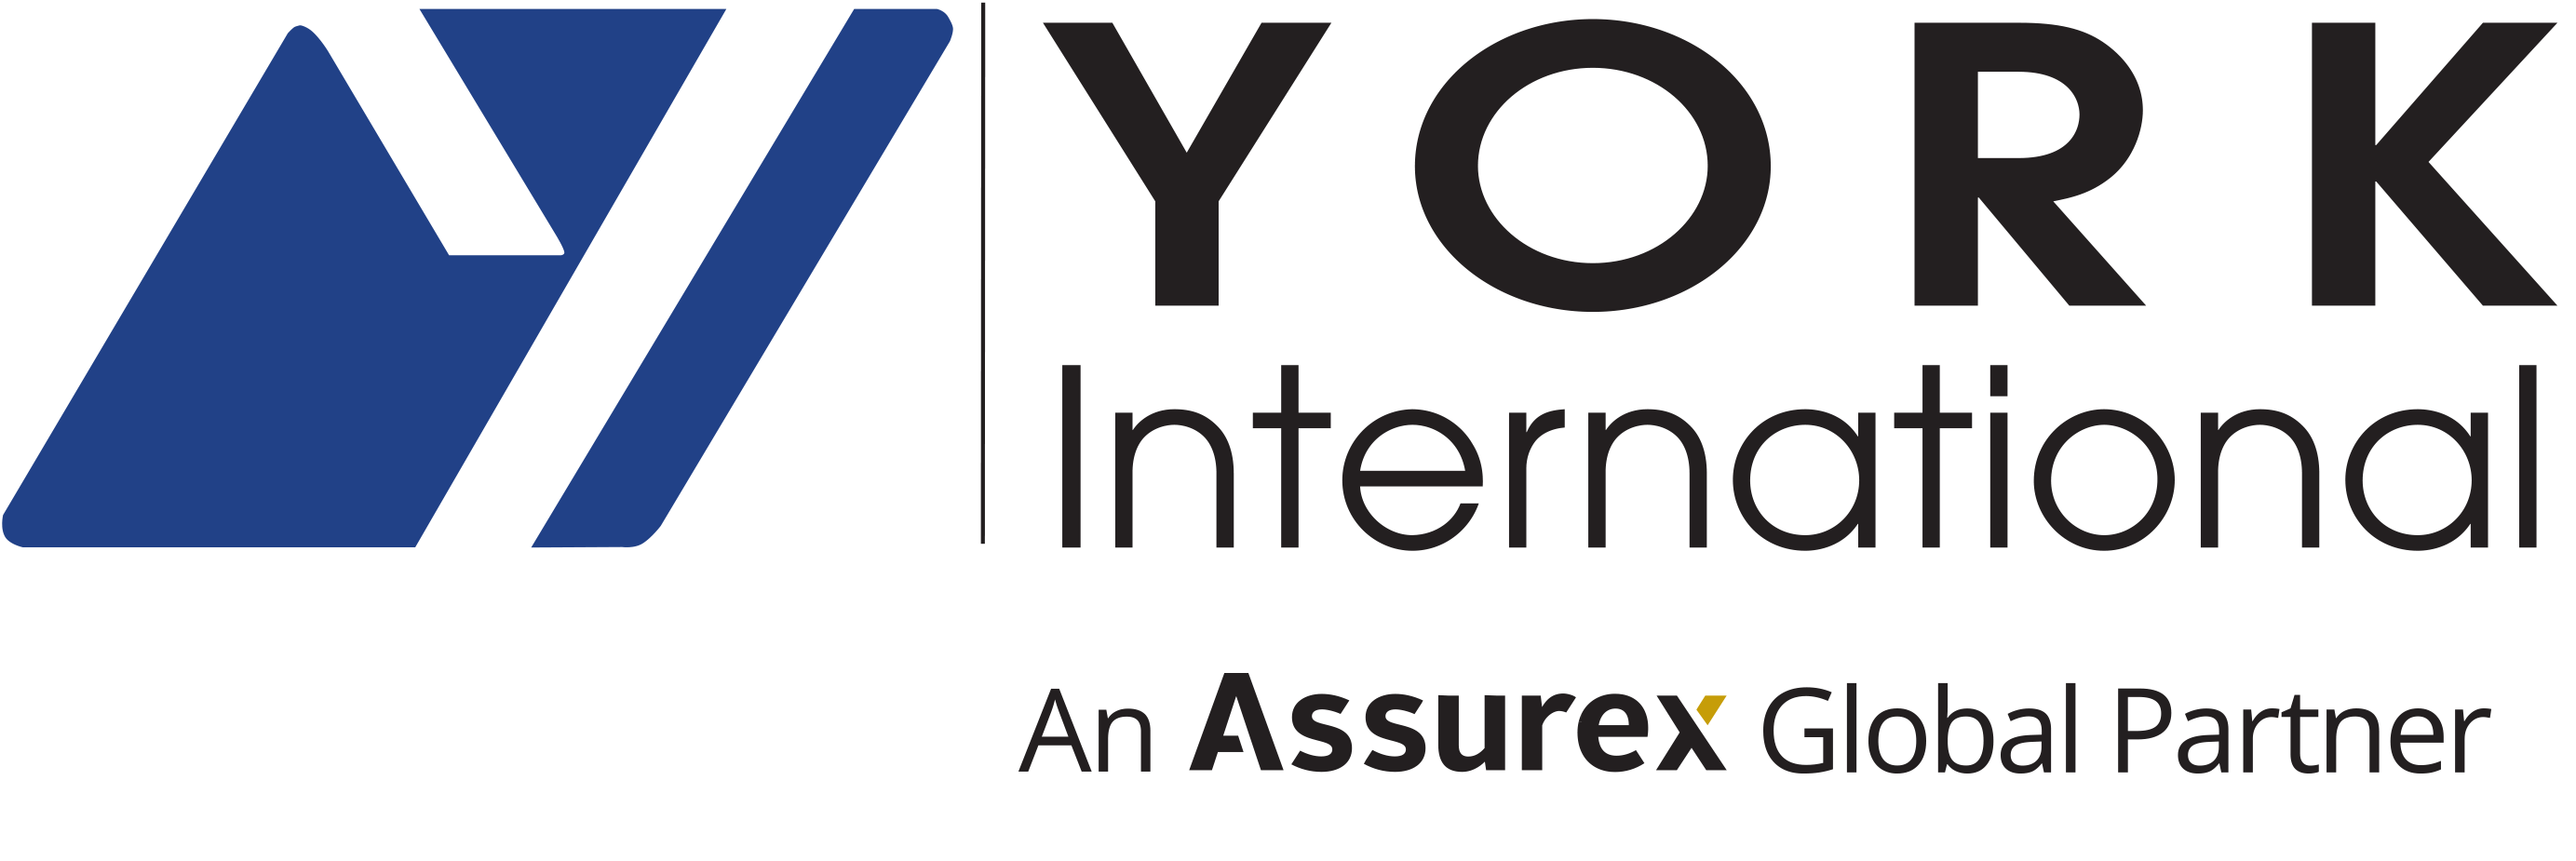 York International Agency, LLC